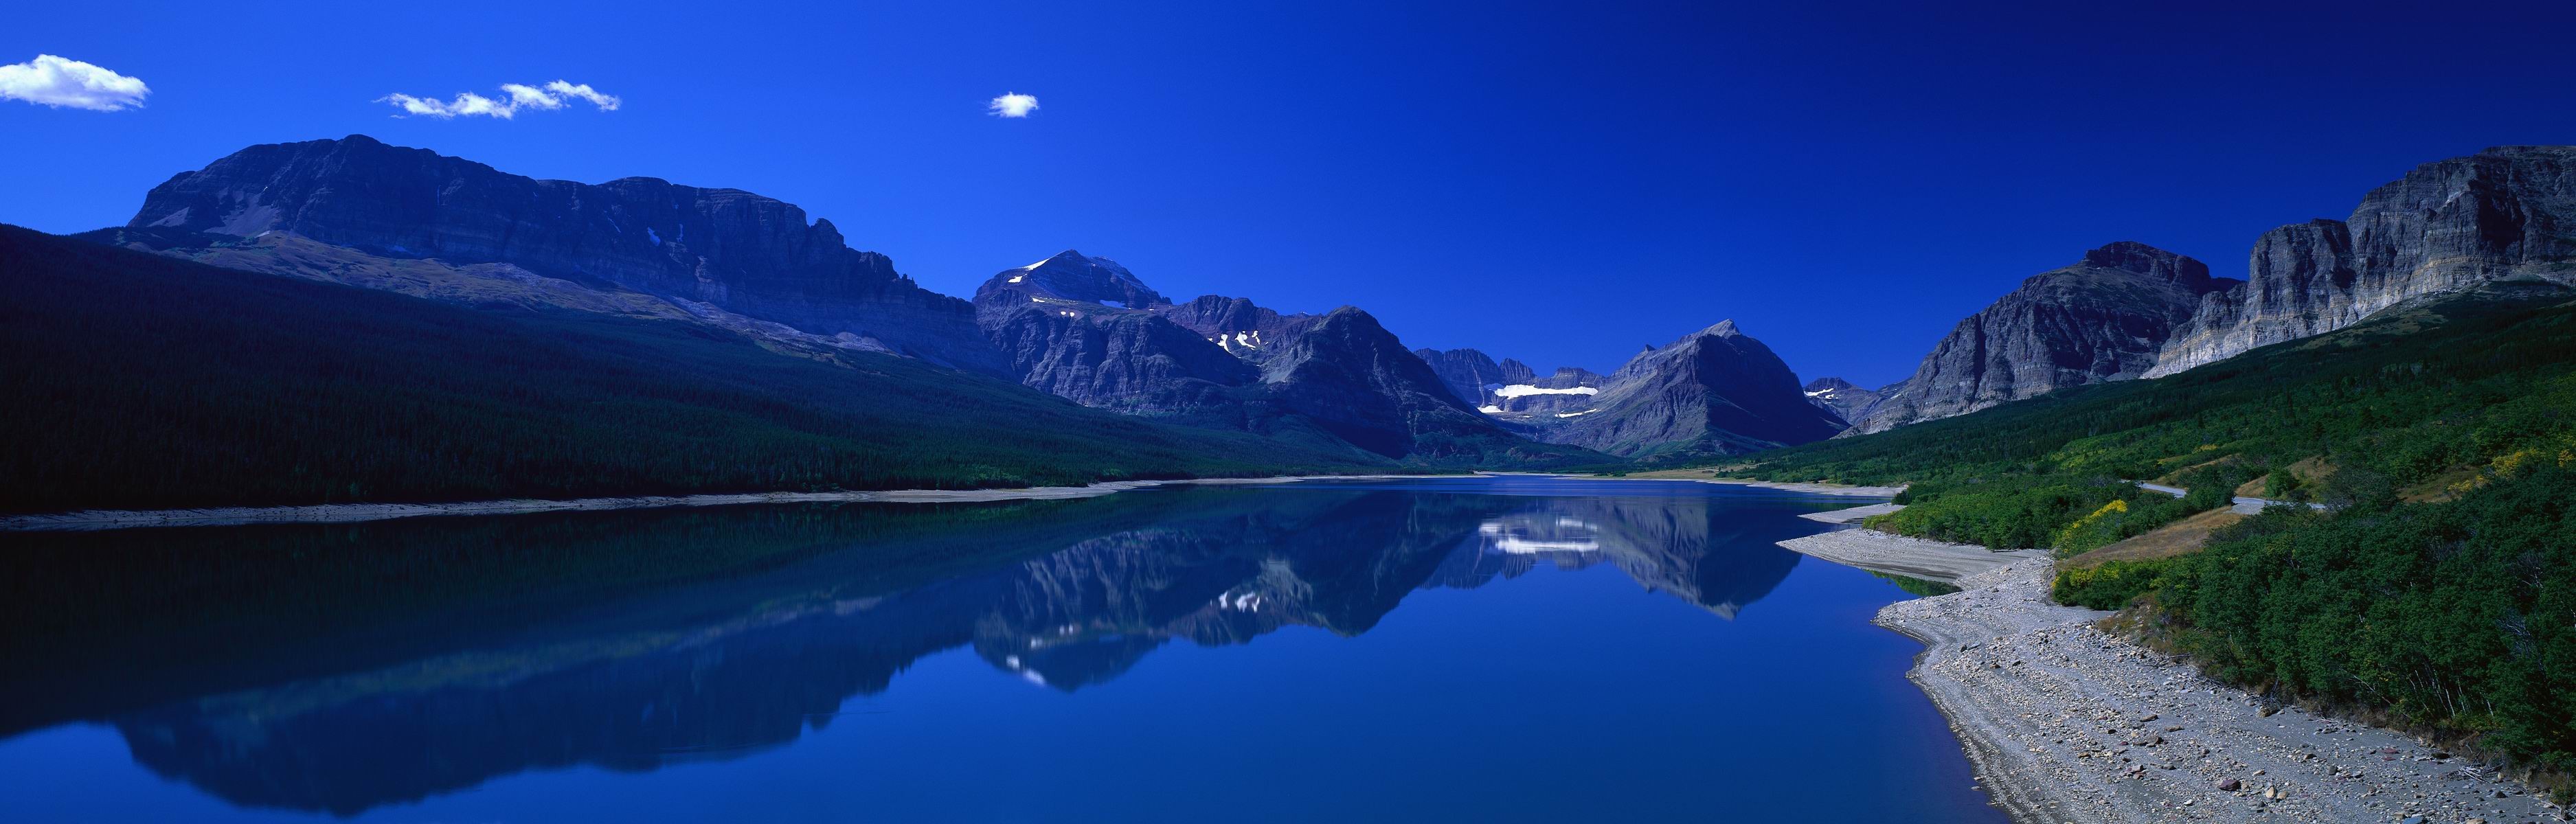 General 3750x1200 nature lake landscape reflection mountains